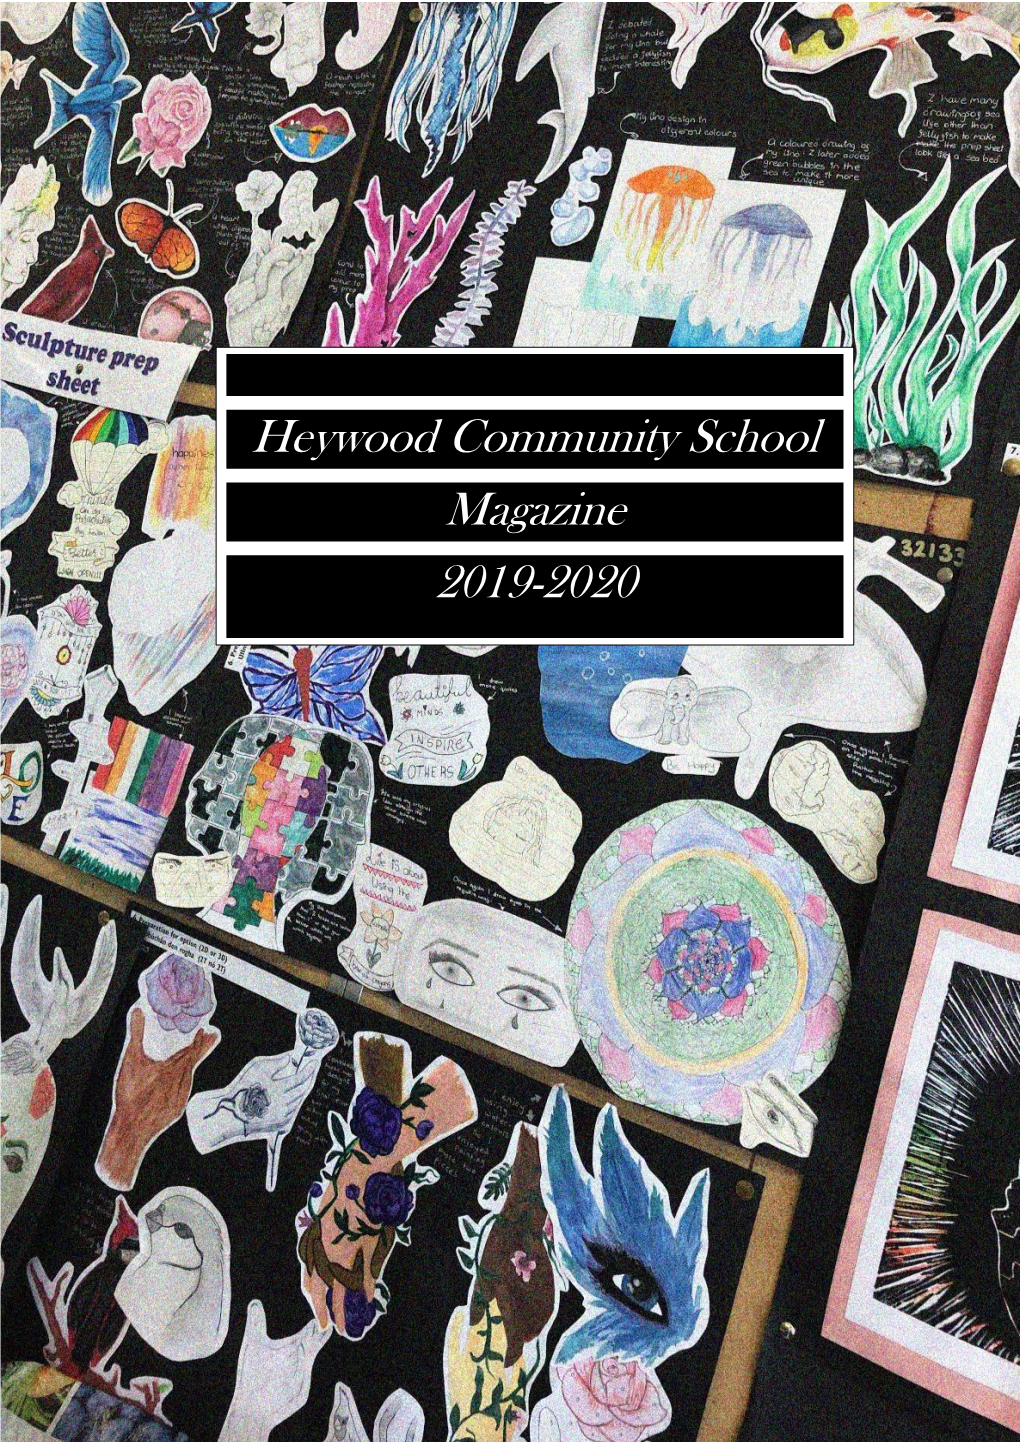 Heywood Community School Magazine 2019-2020